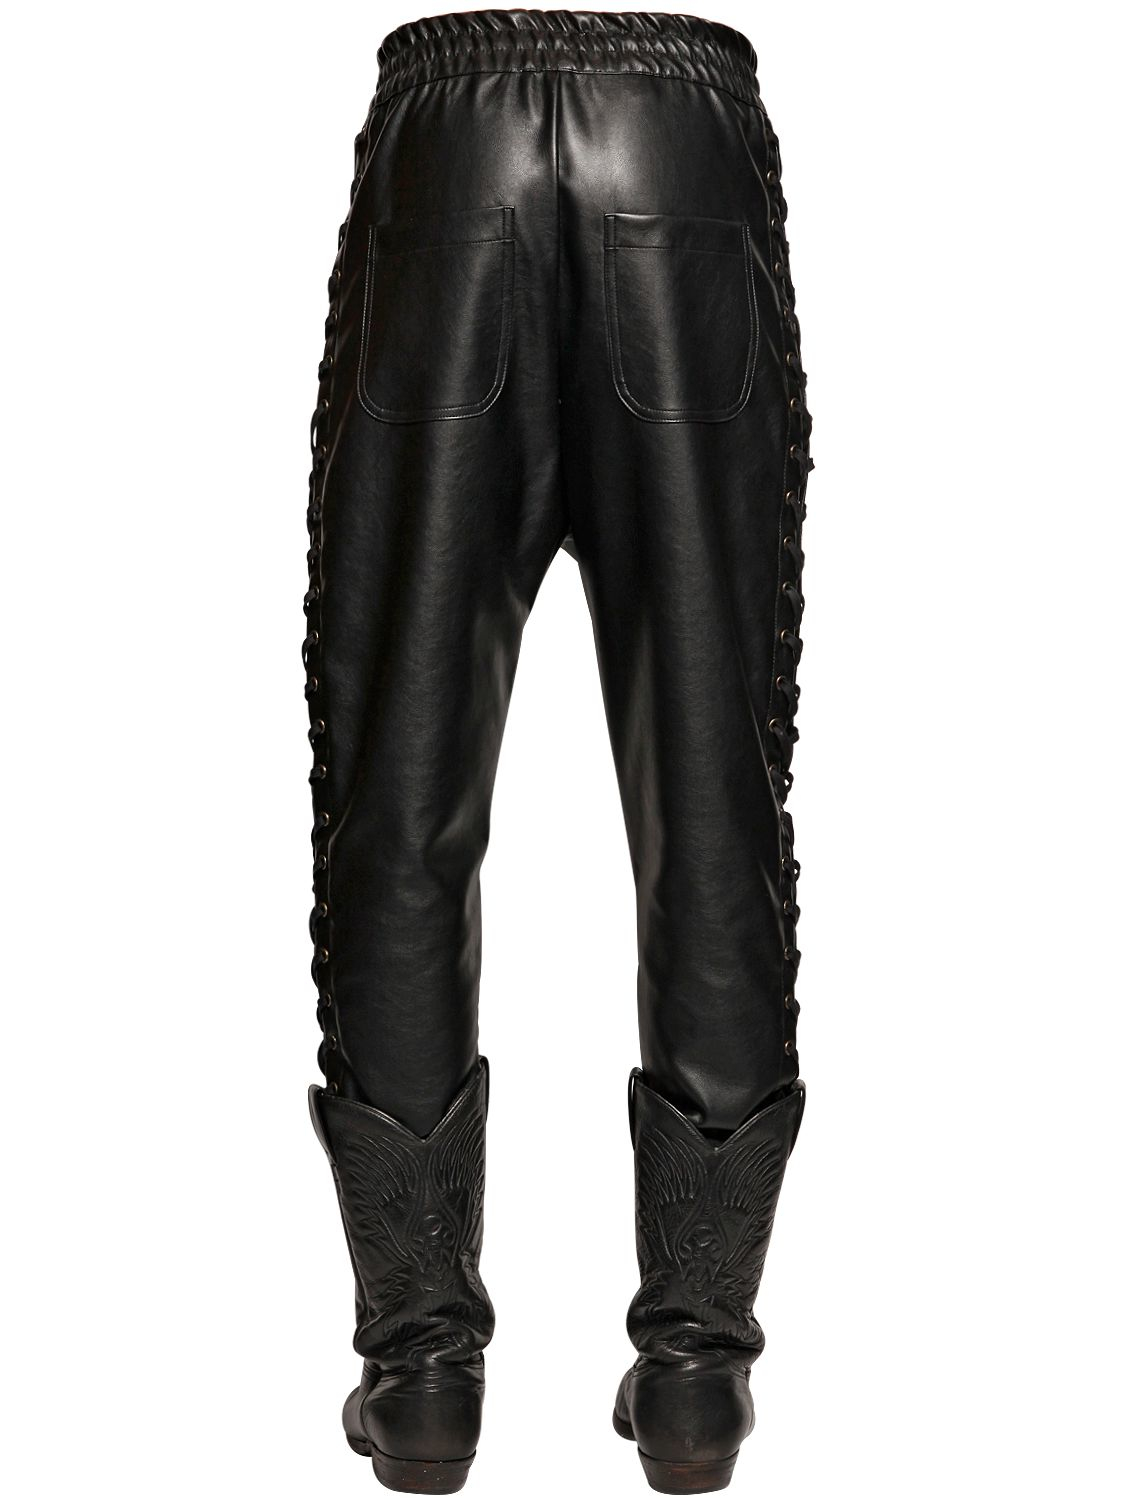 Faith Connexion Lace-up Faux Leather Pants in Black for Men - Lyst